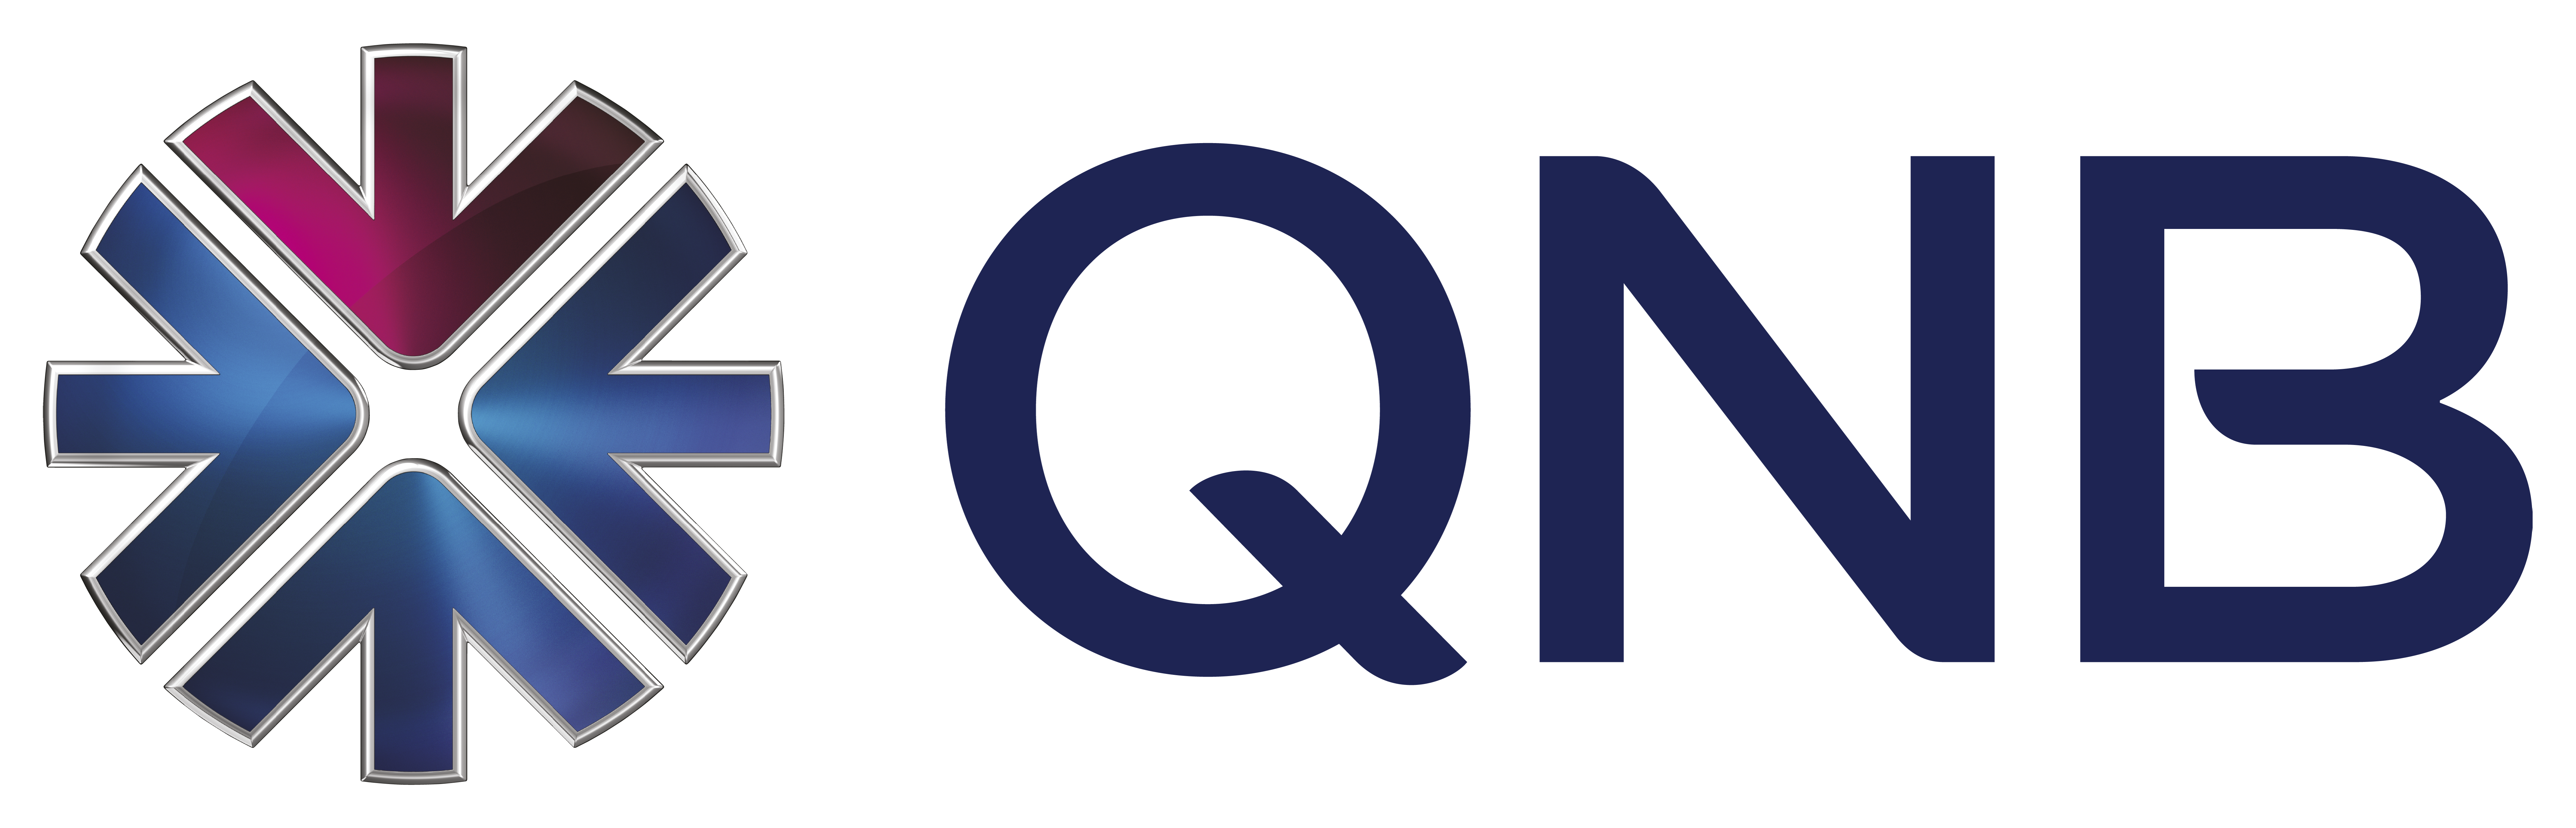 Qnb sponsor